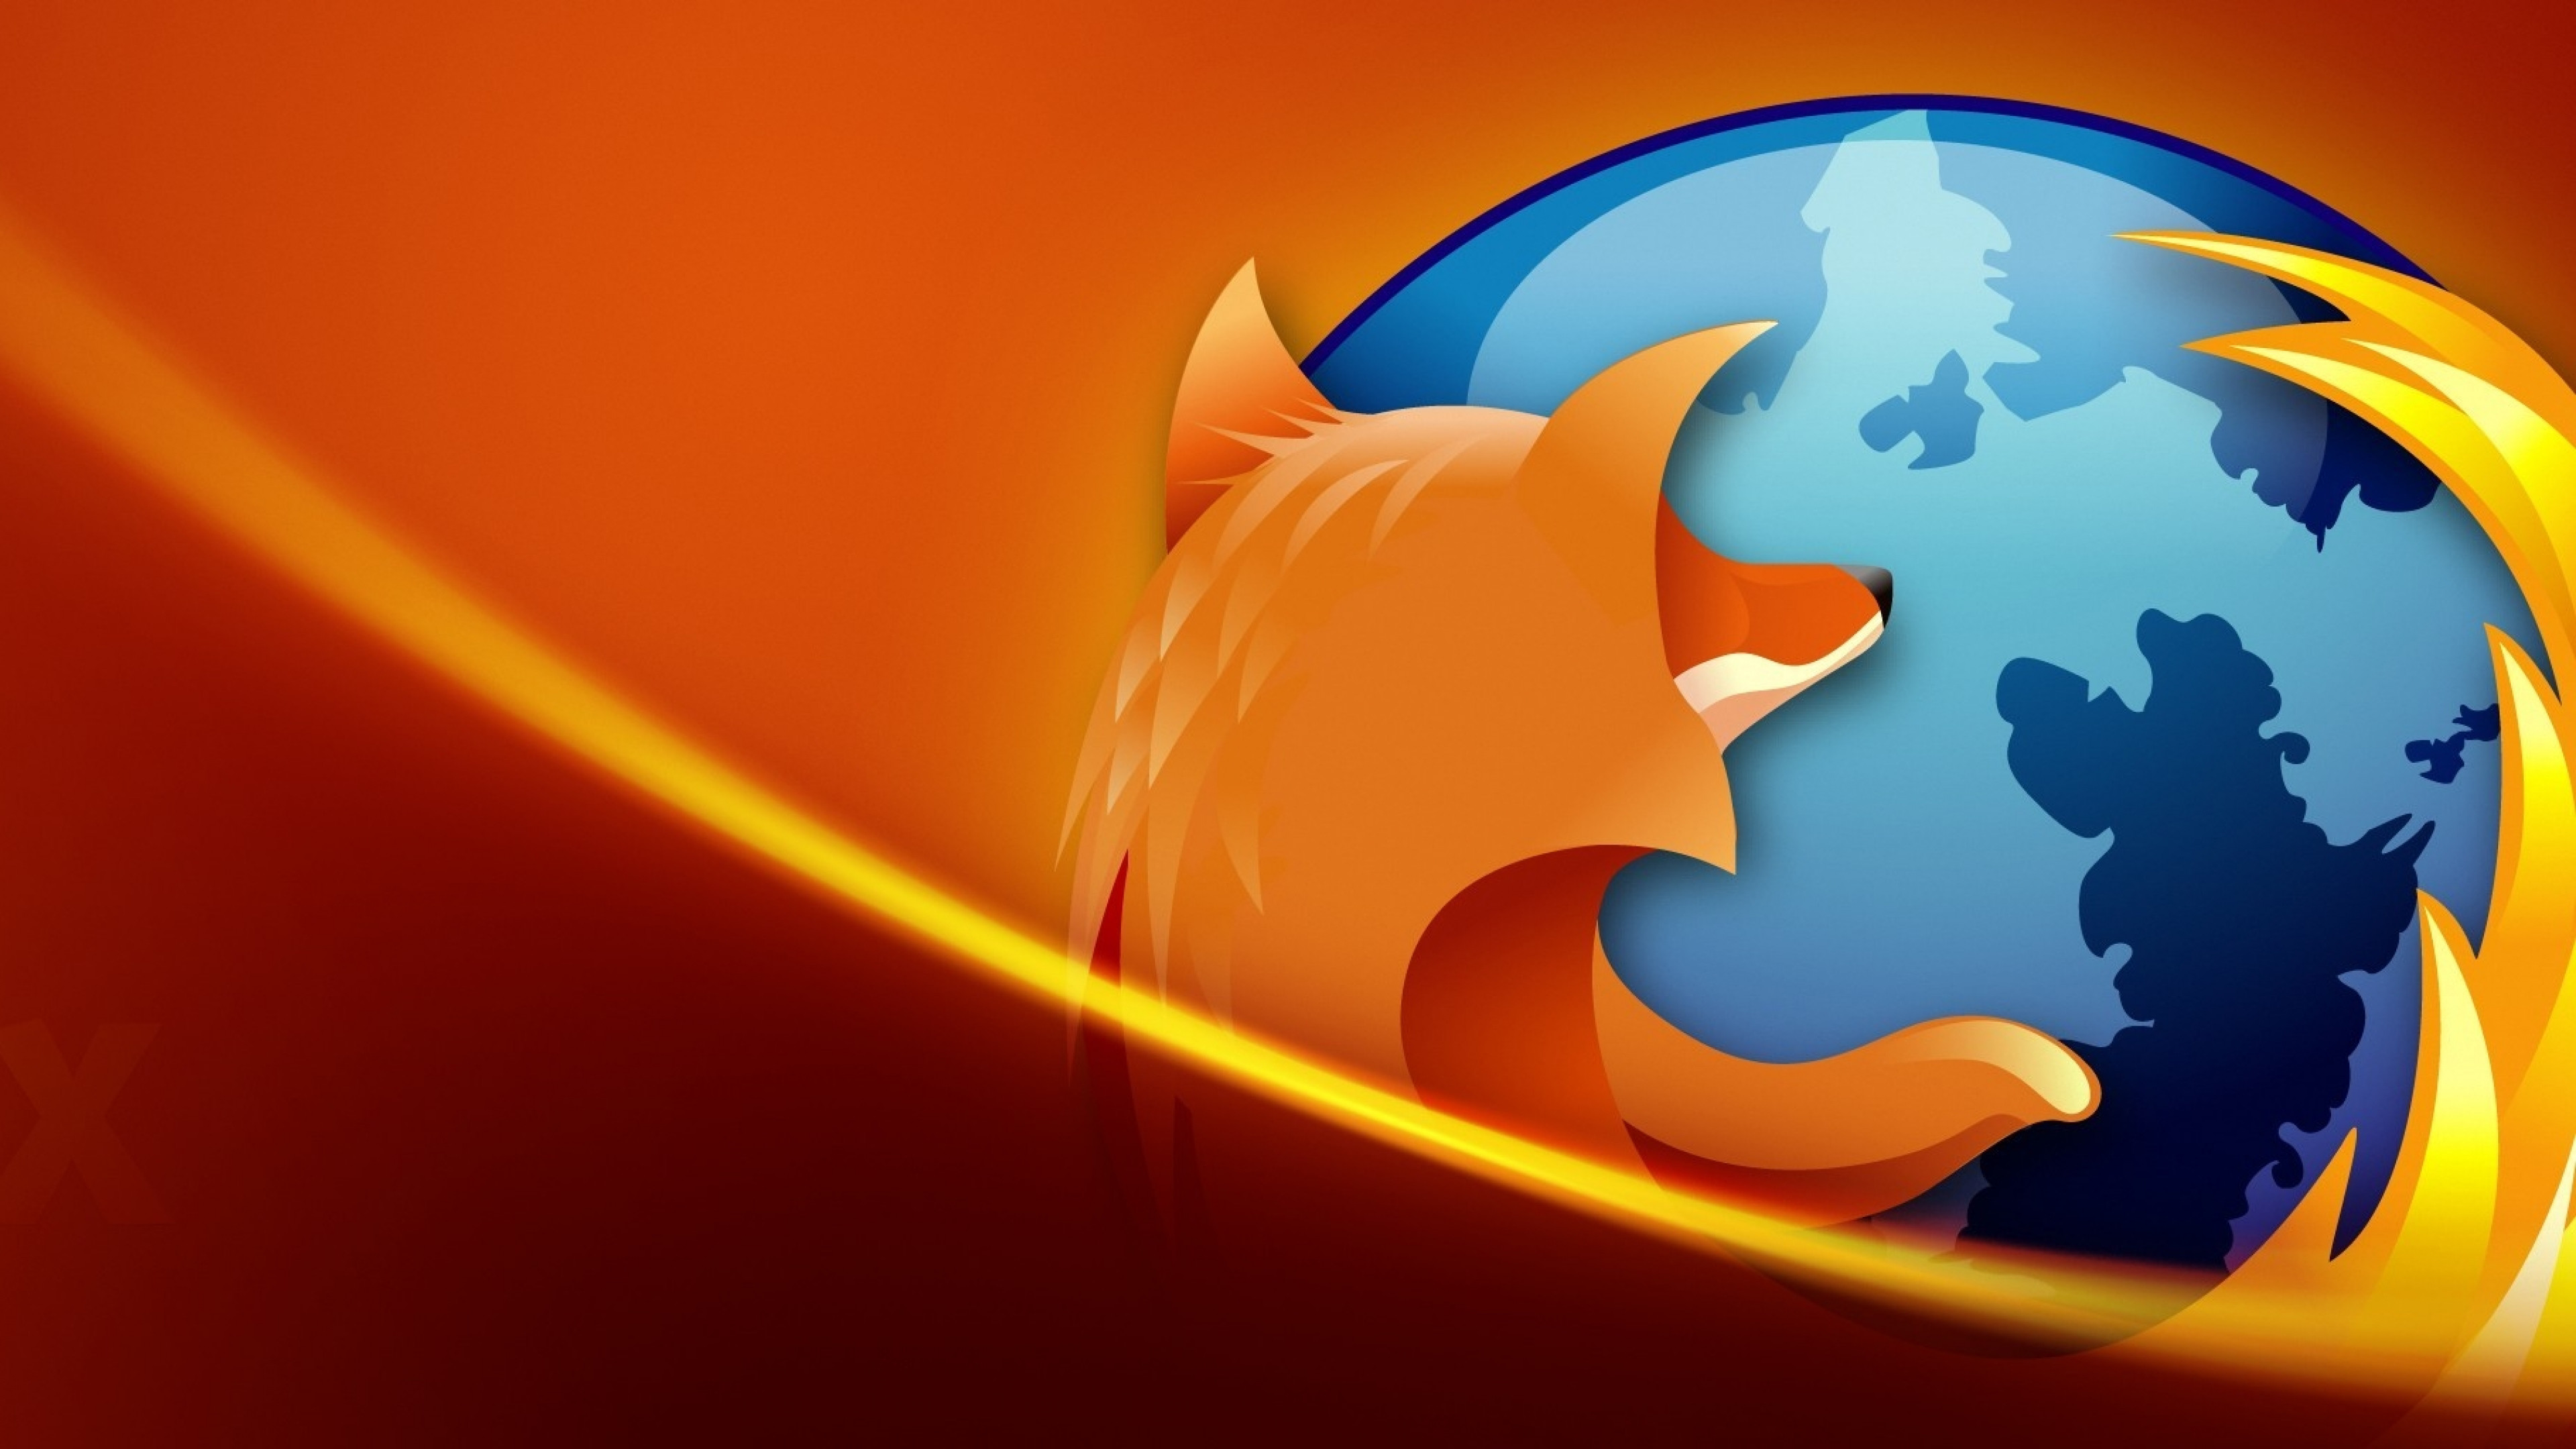 50+] Wallpaper Firefox - WallpaperSafari